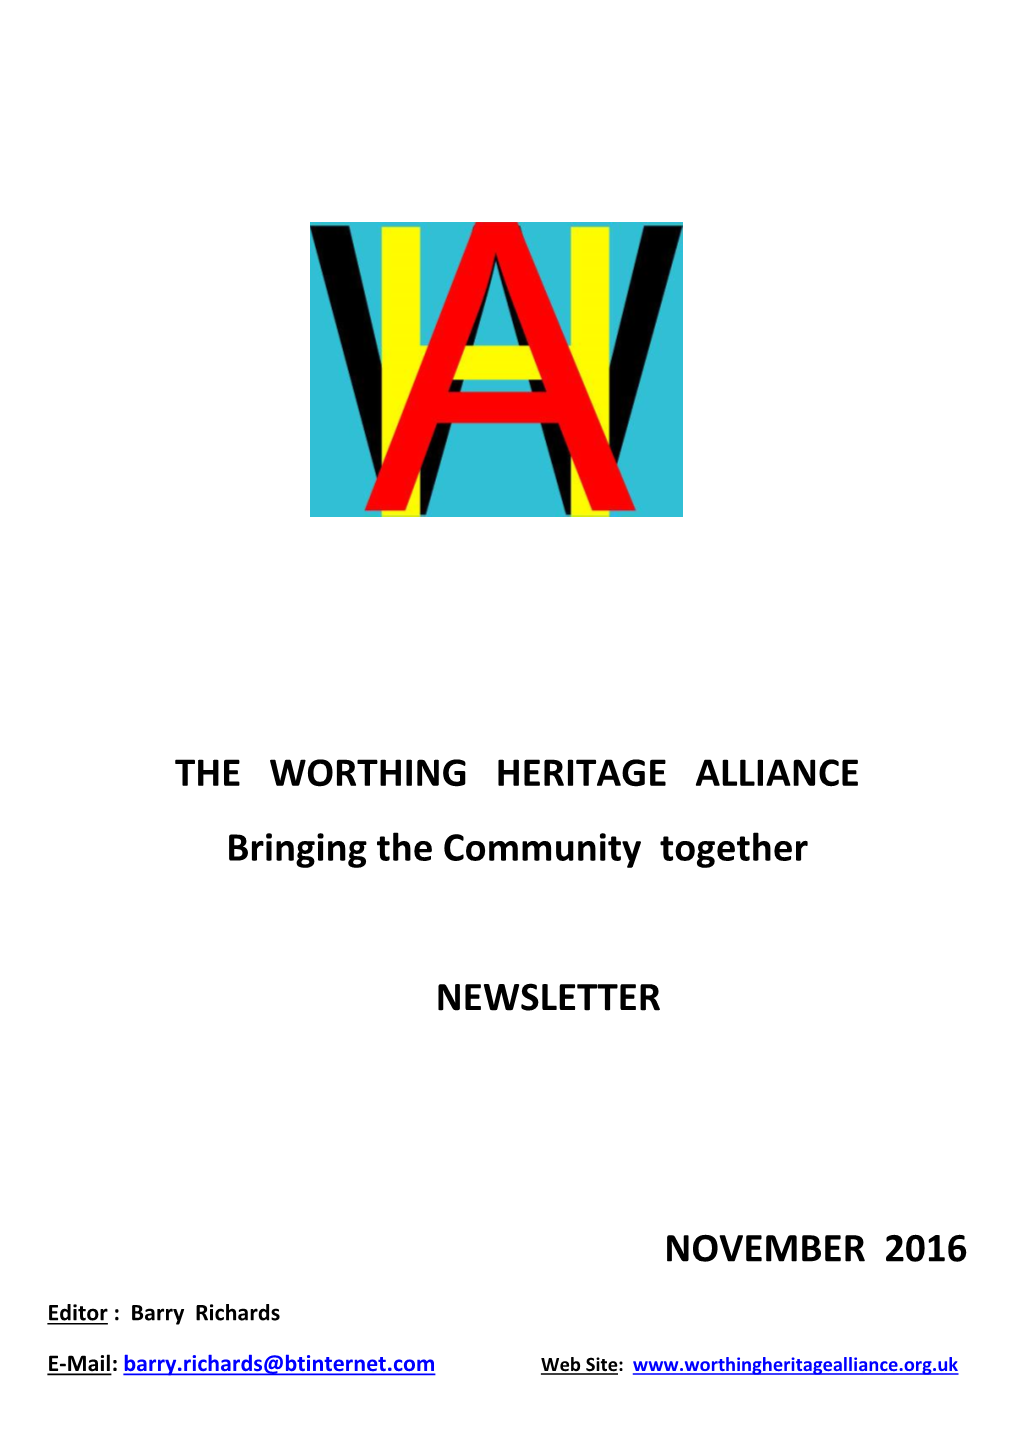 THE WORTHING HERITAGE ALLIANCE Bringing the Community Together